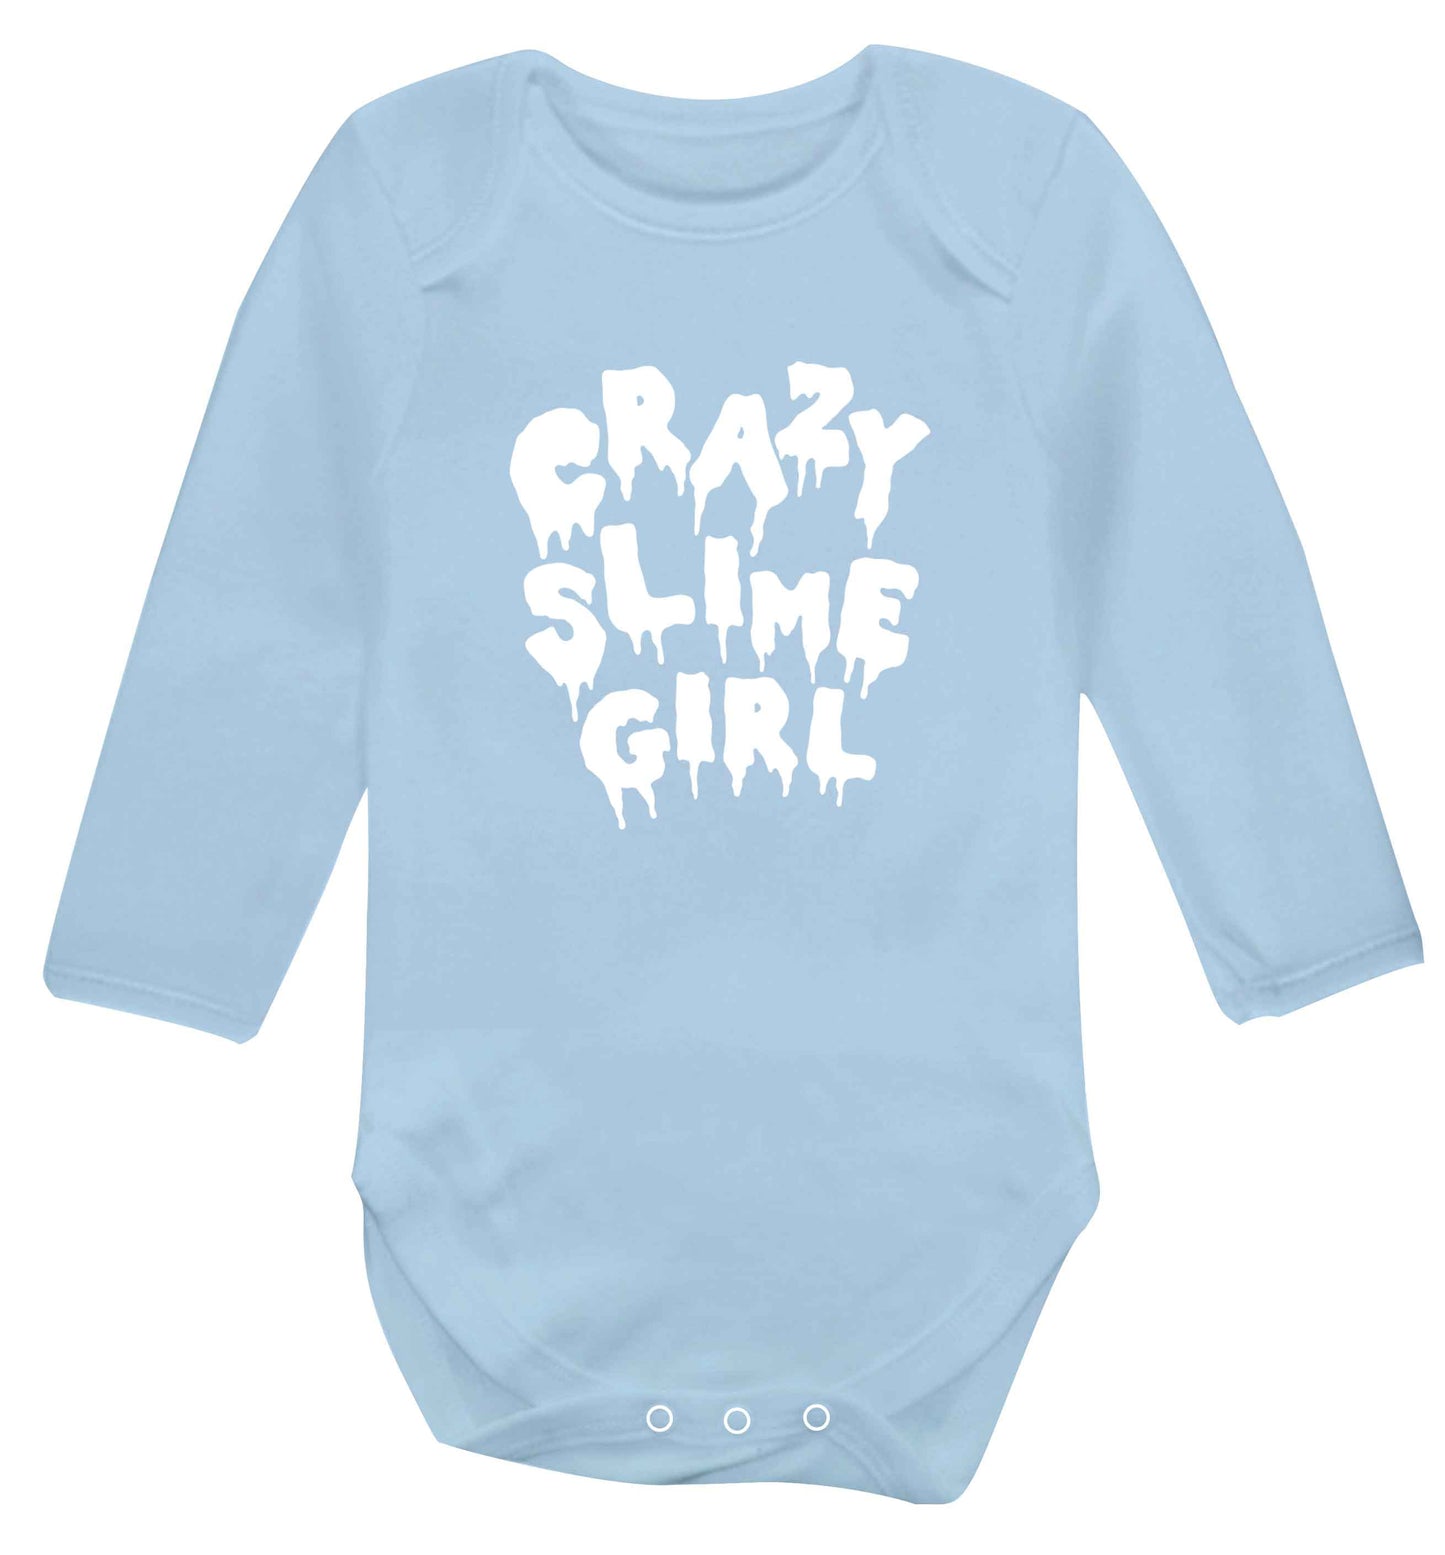 Crazy slime girl baby vest long sleeved pale blue 6-12 months